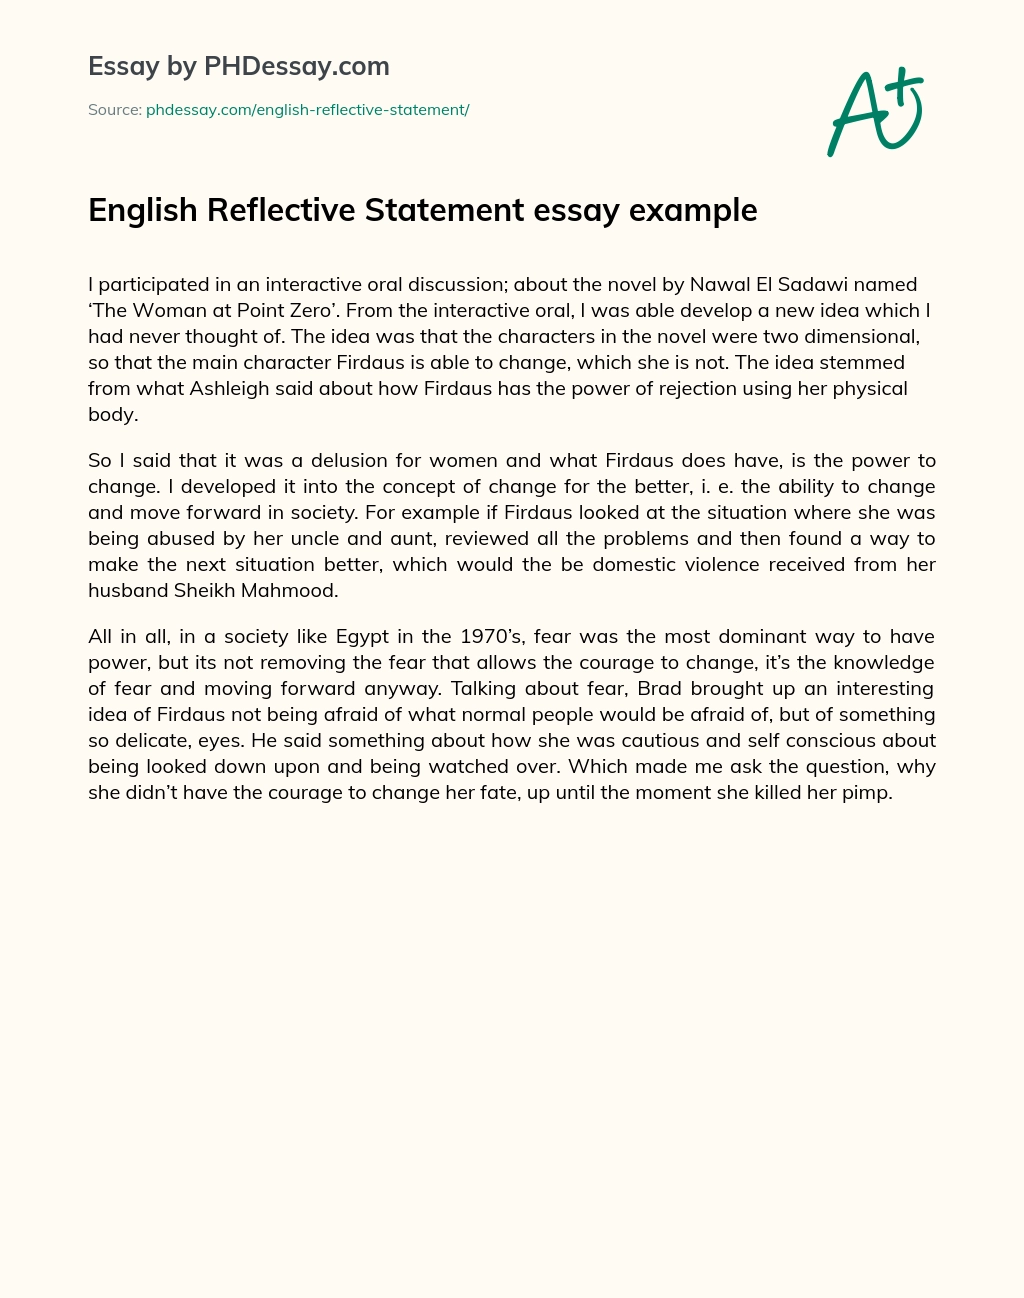 English Reflective Statement essay example